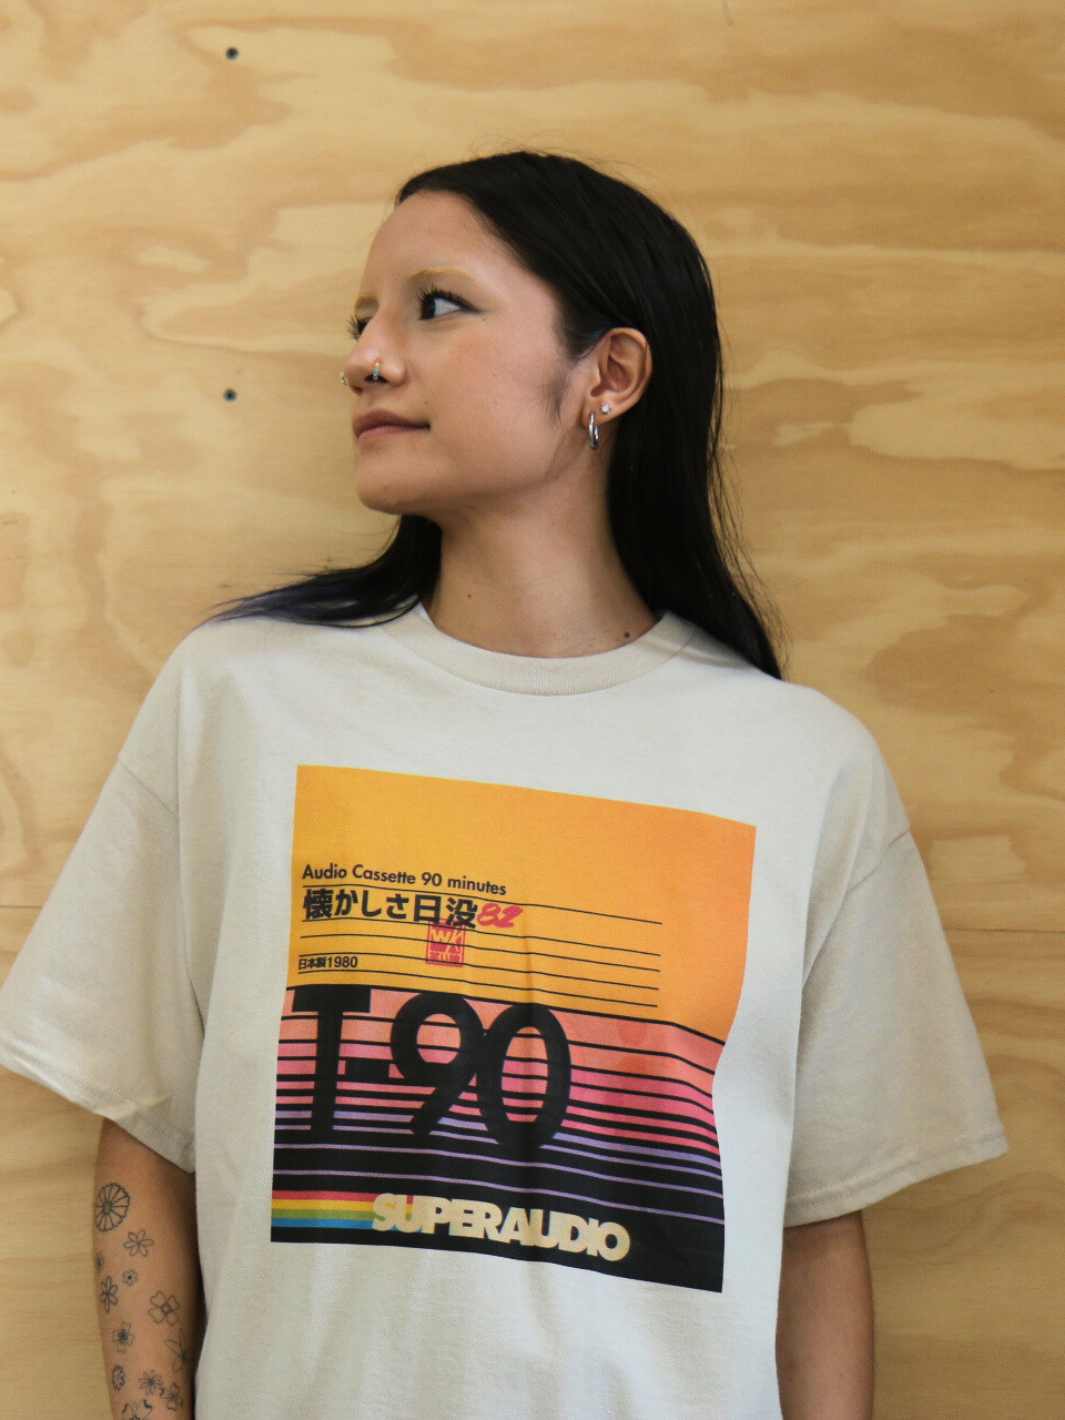 Popkiller Artist Series Warakami Vaporwave Nostalgia Sunset Classic T-shirt